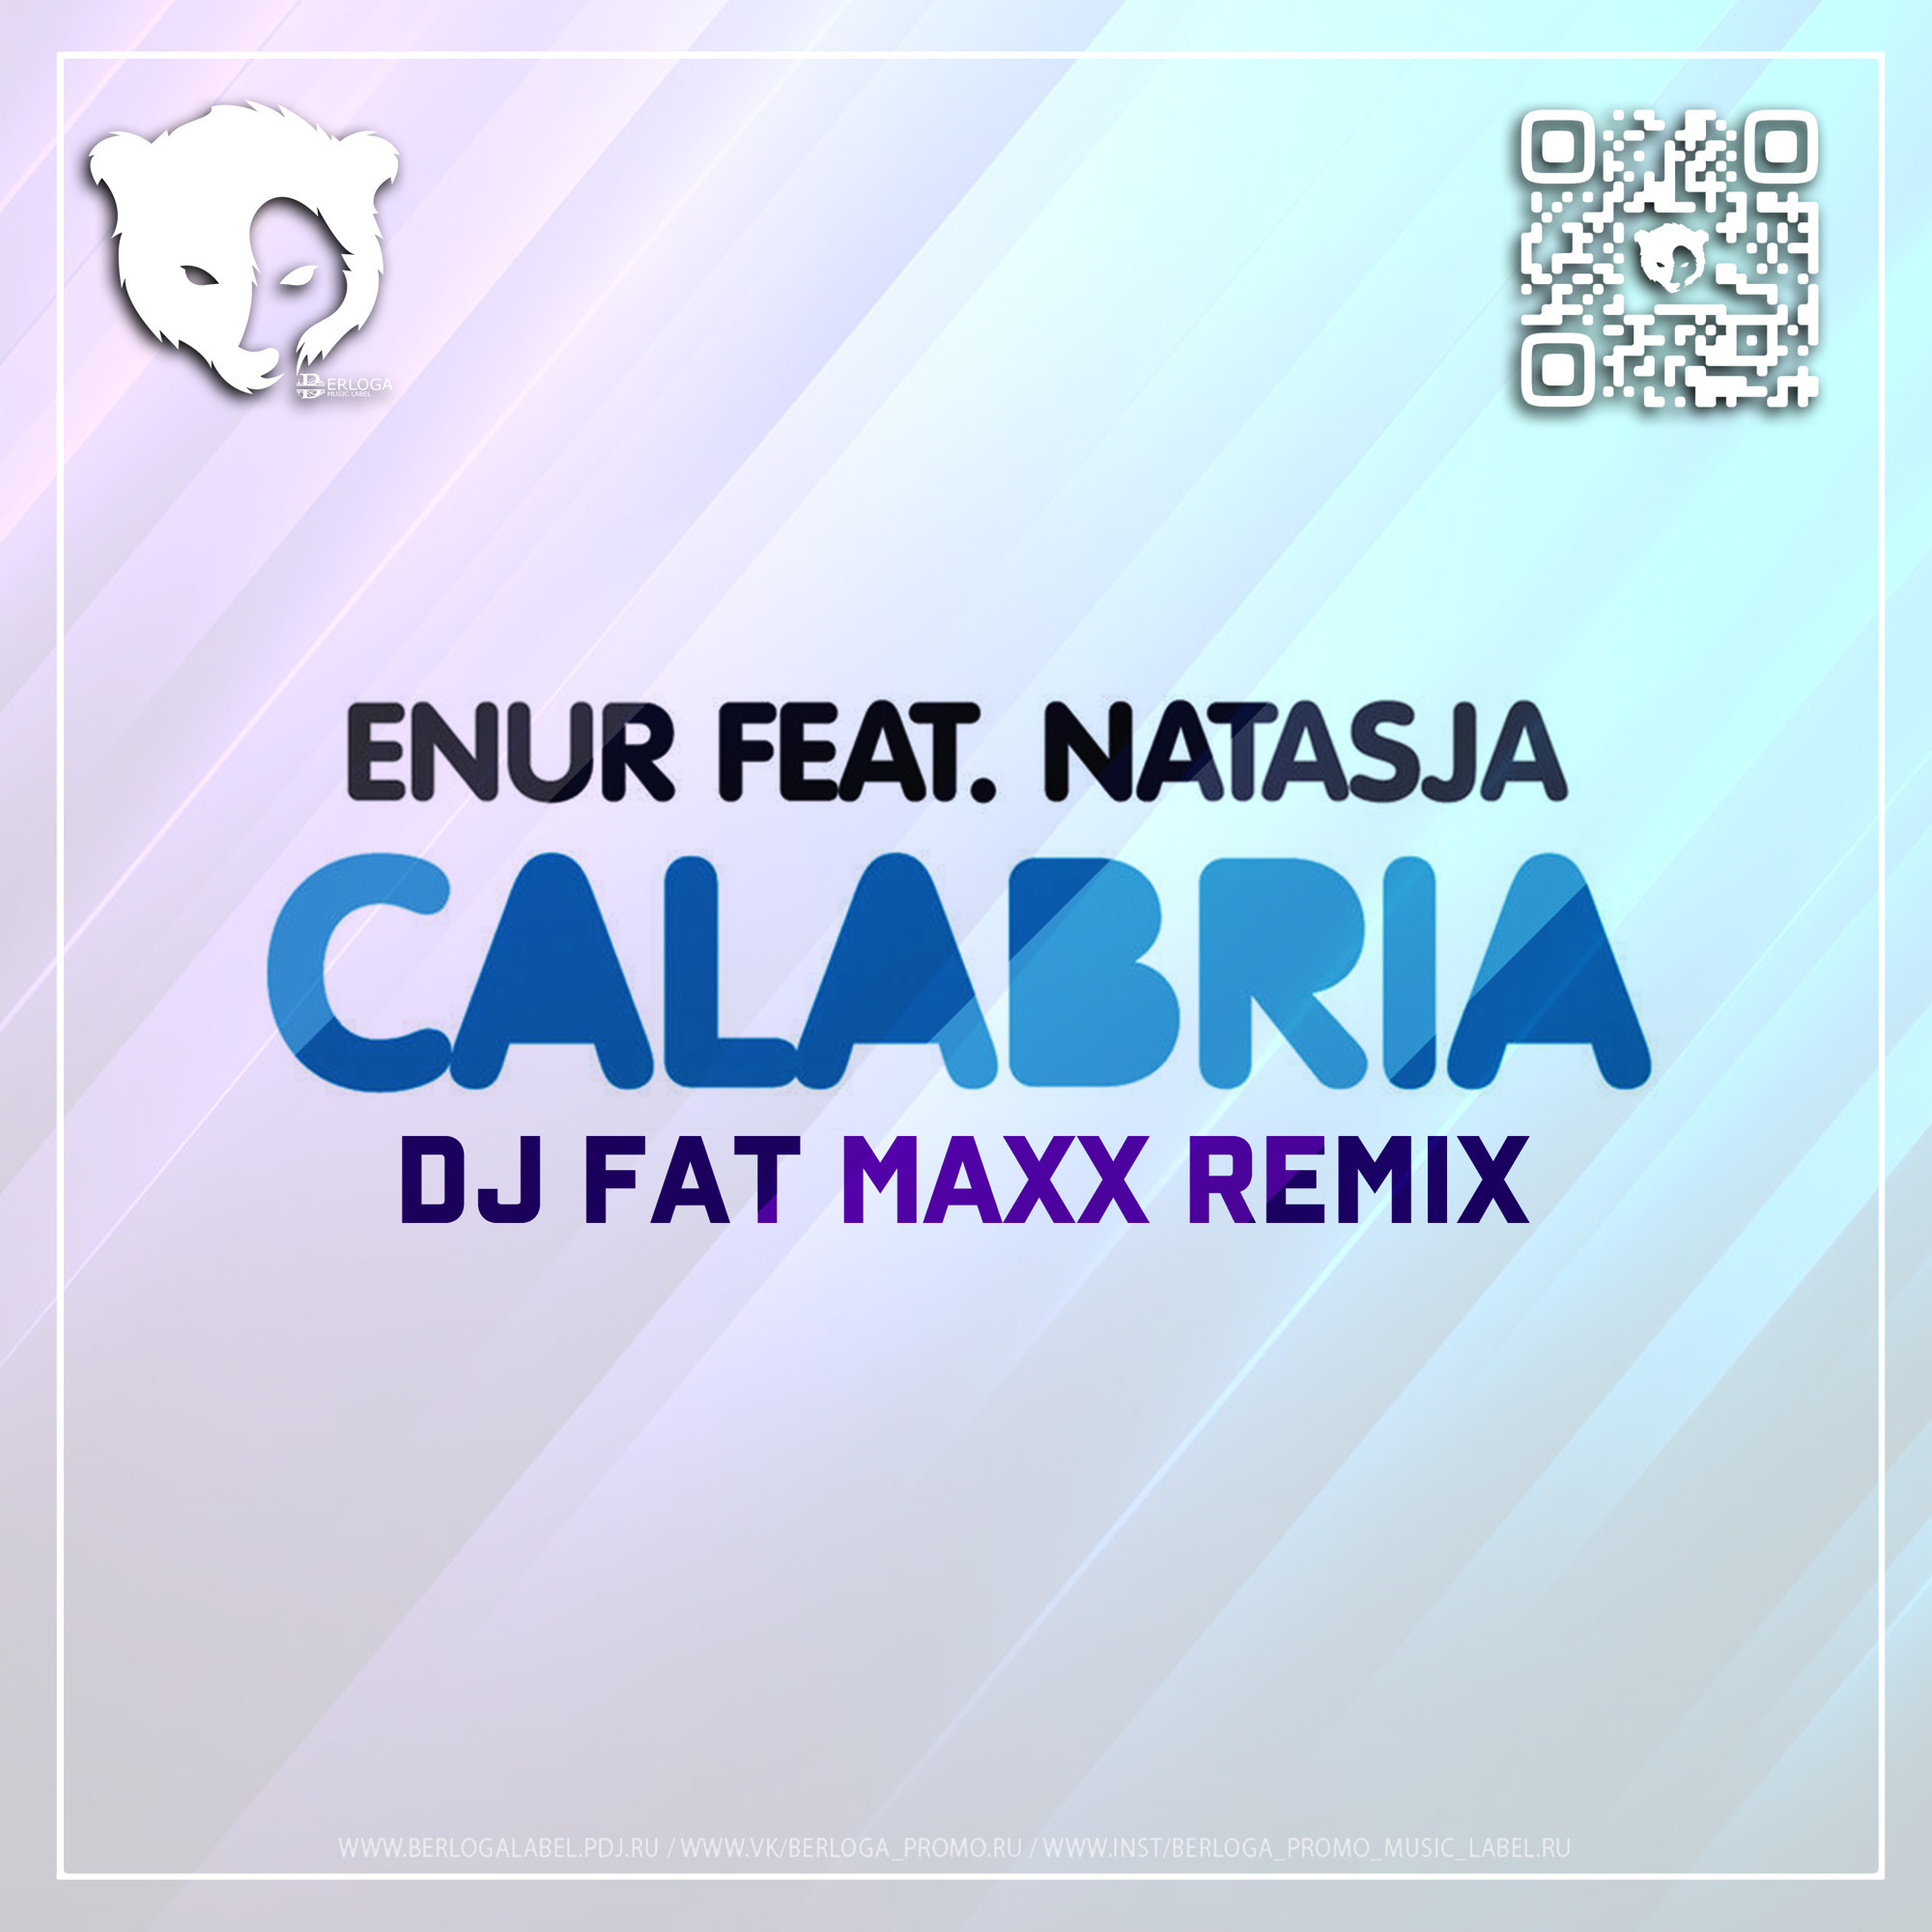 Enur feat. Natasja Calabria 2007. Enur x Natasja - Calabria (DJ fat Maxx Remix). Get a way - Original + Remixes Maxx. Дым бомбим fat maxx remix